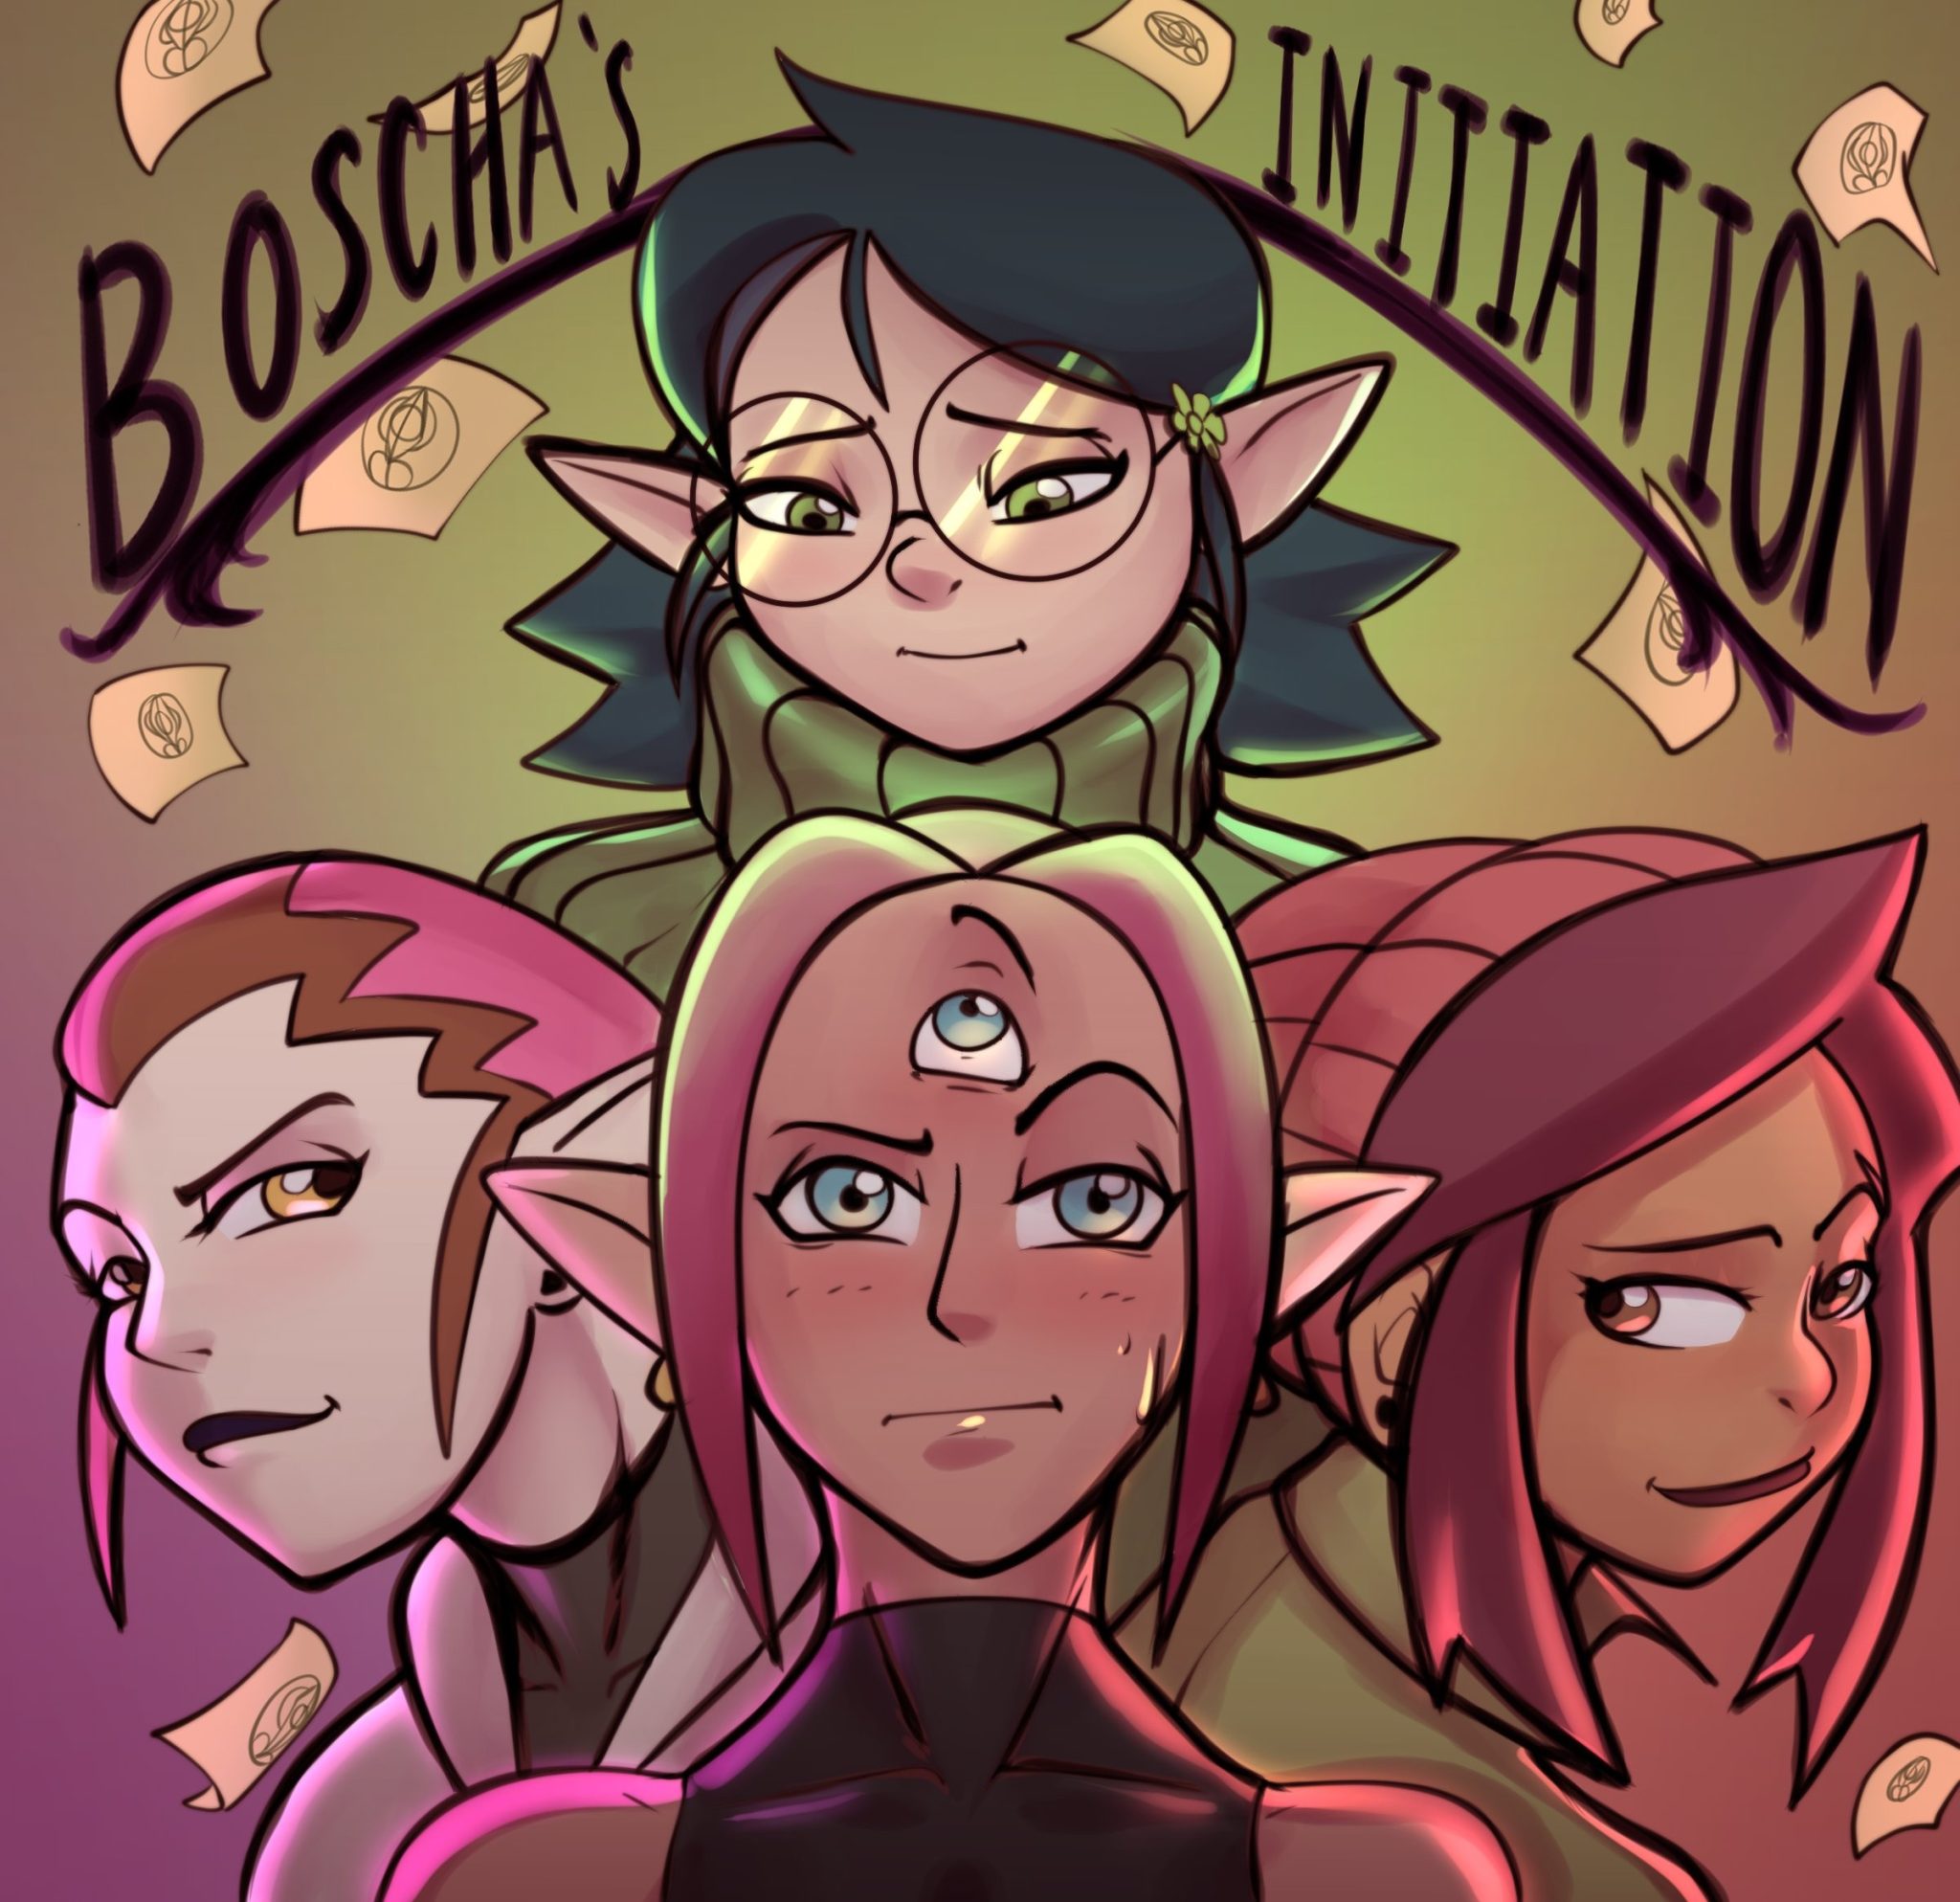 Boscha’s Initiation